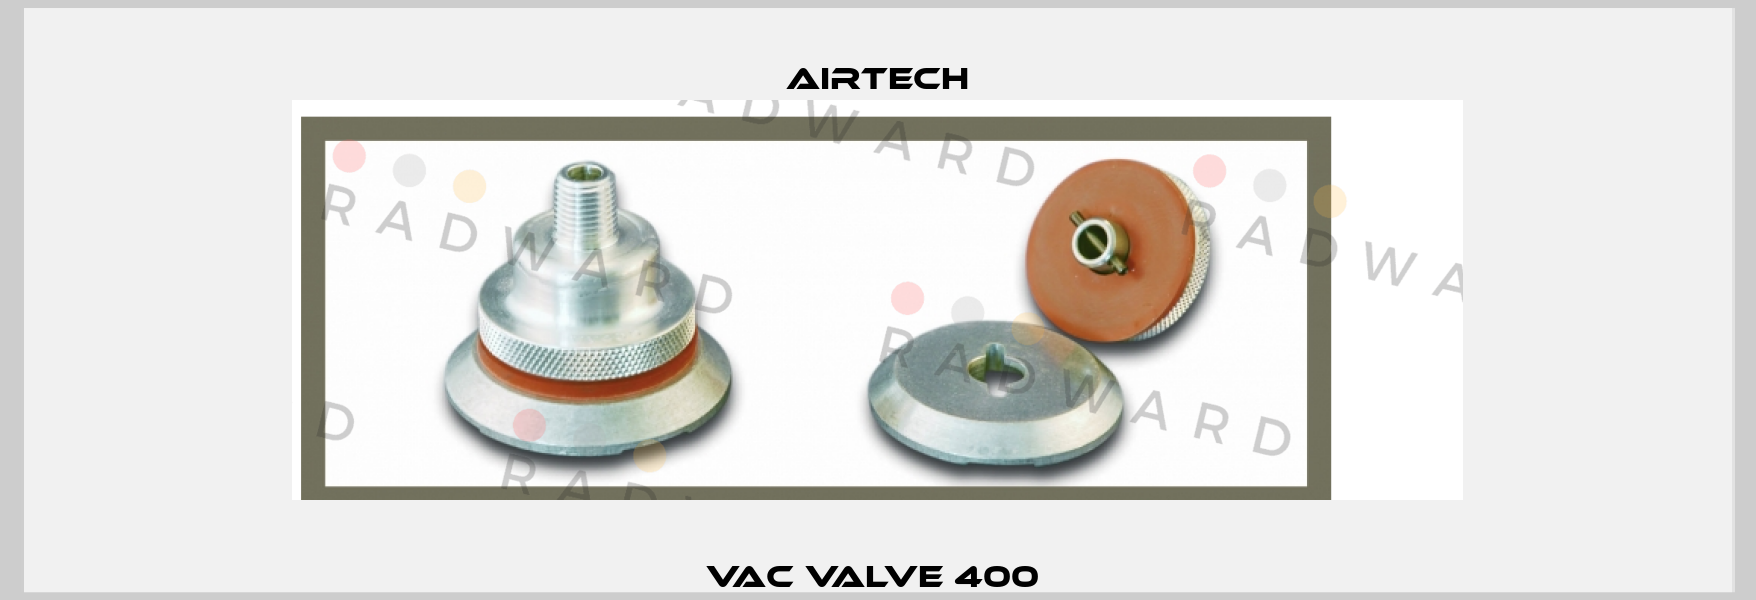 Vac Valve 400  Airtech